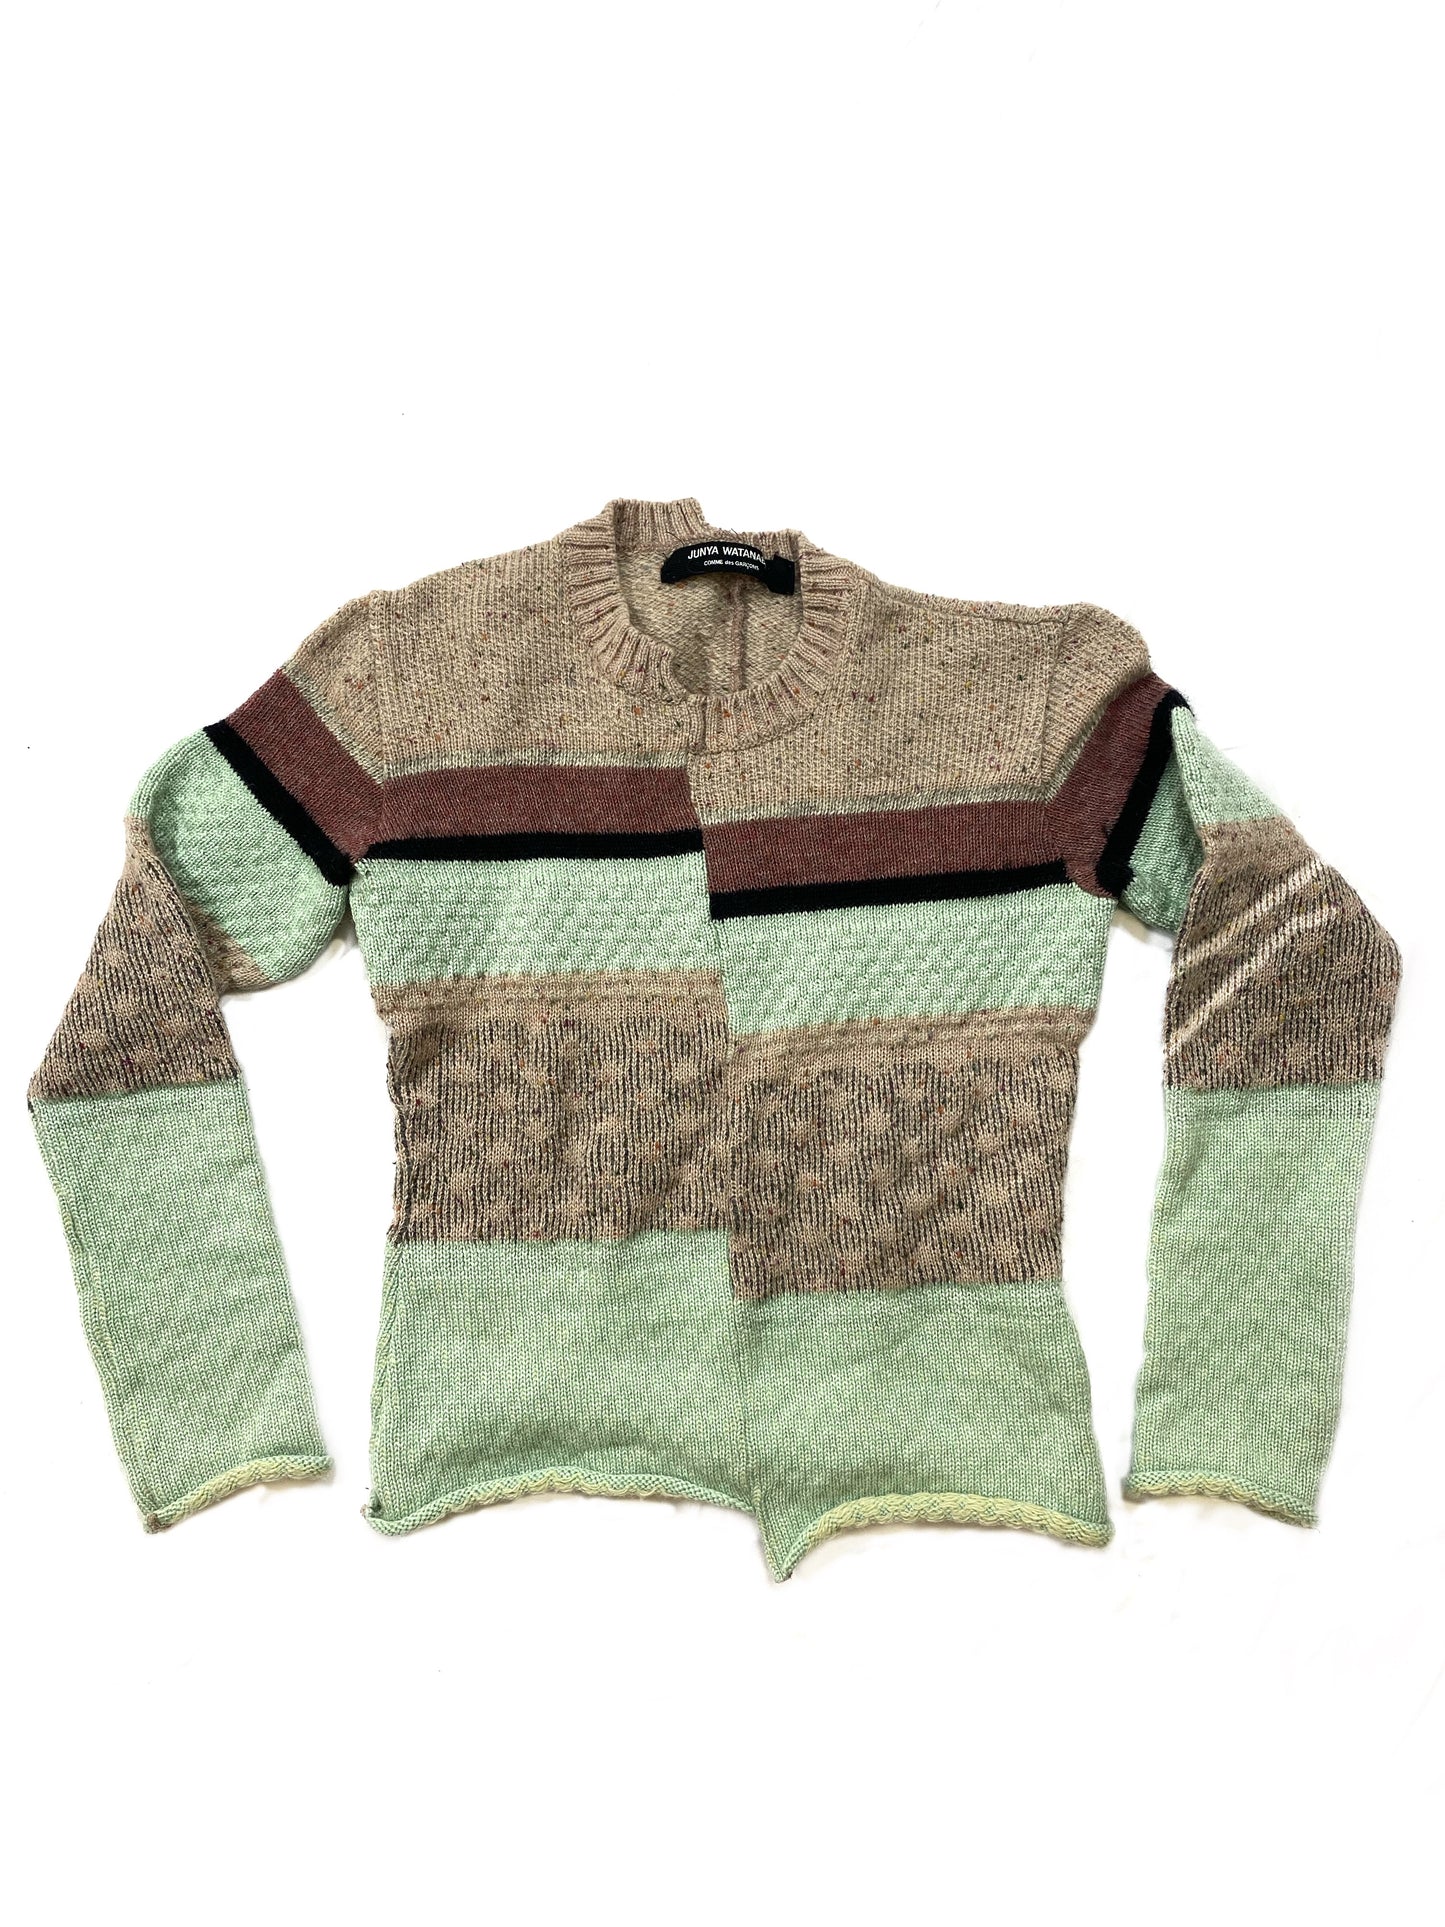 Junya Watanabe rebuild knit sweater A/W97